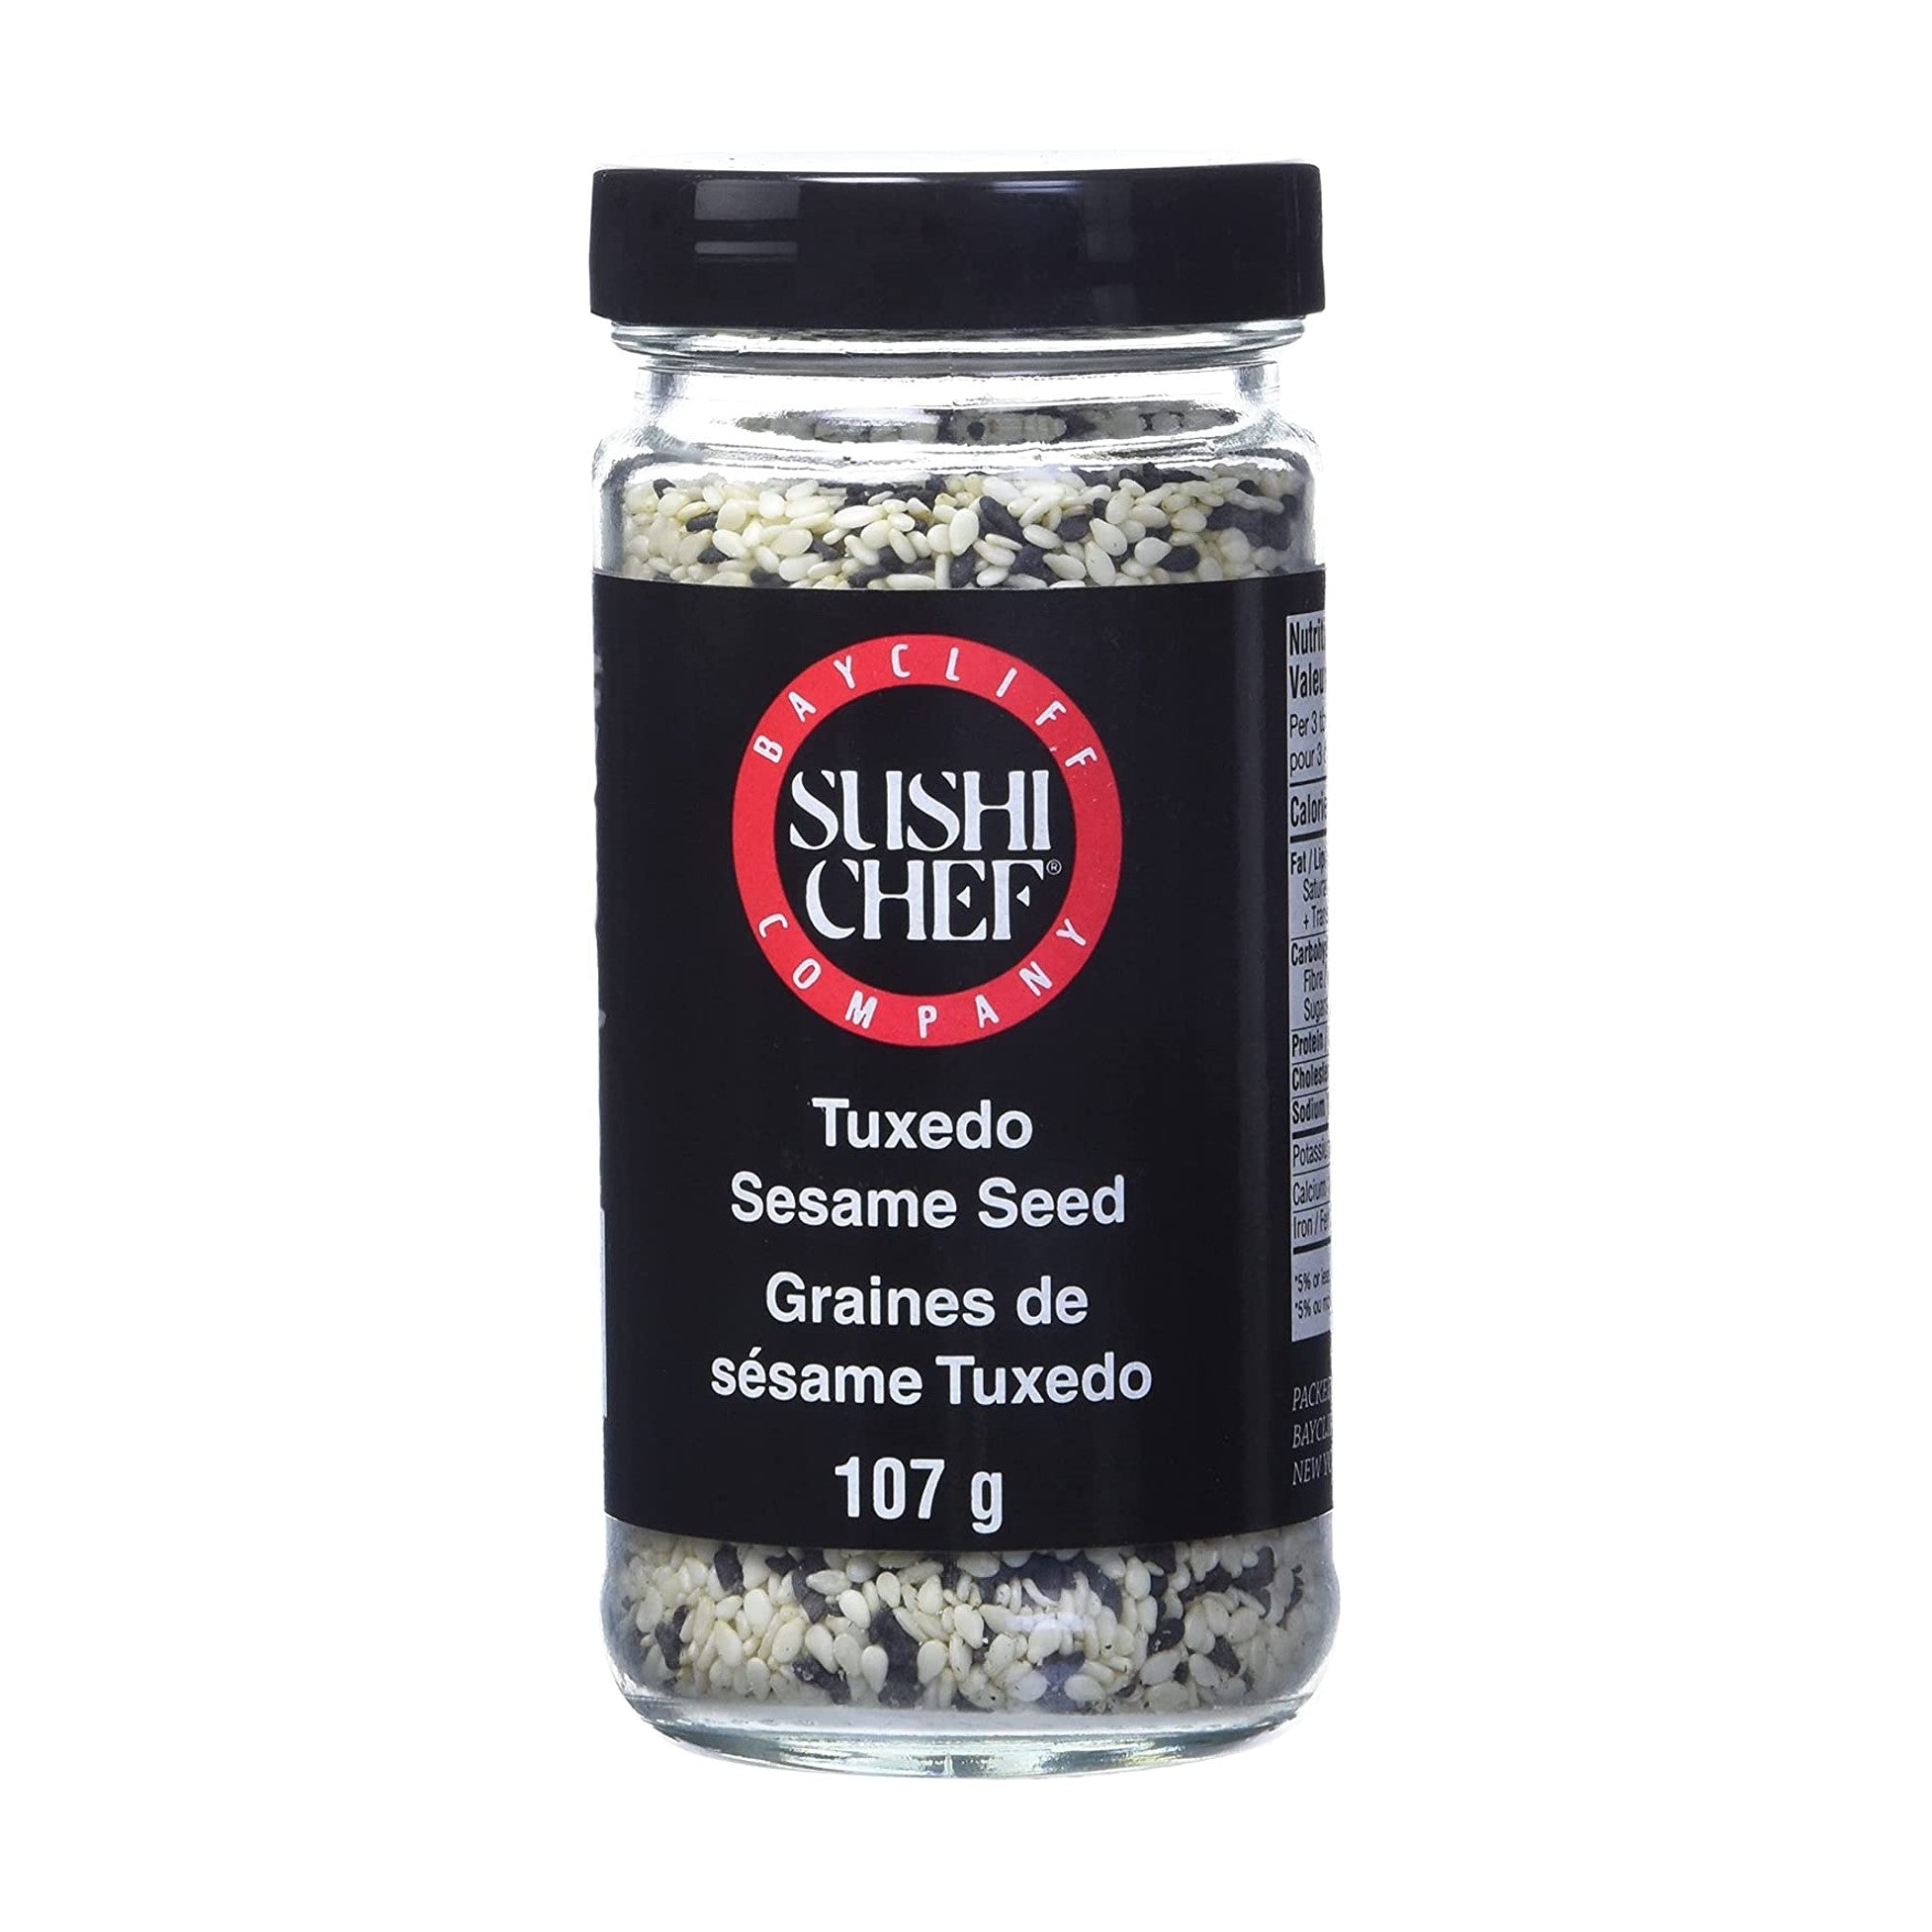 Sushi Chef Tuxedo Sesame Seeds 107g